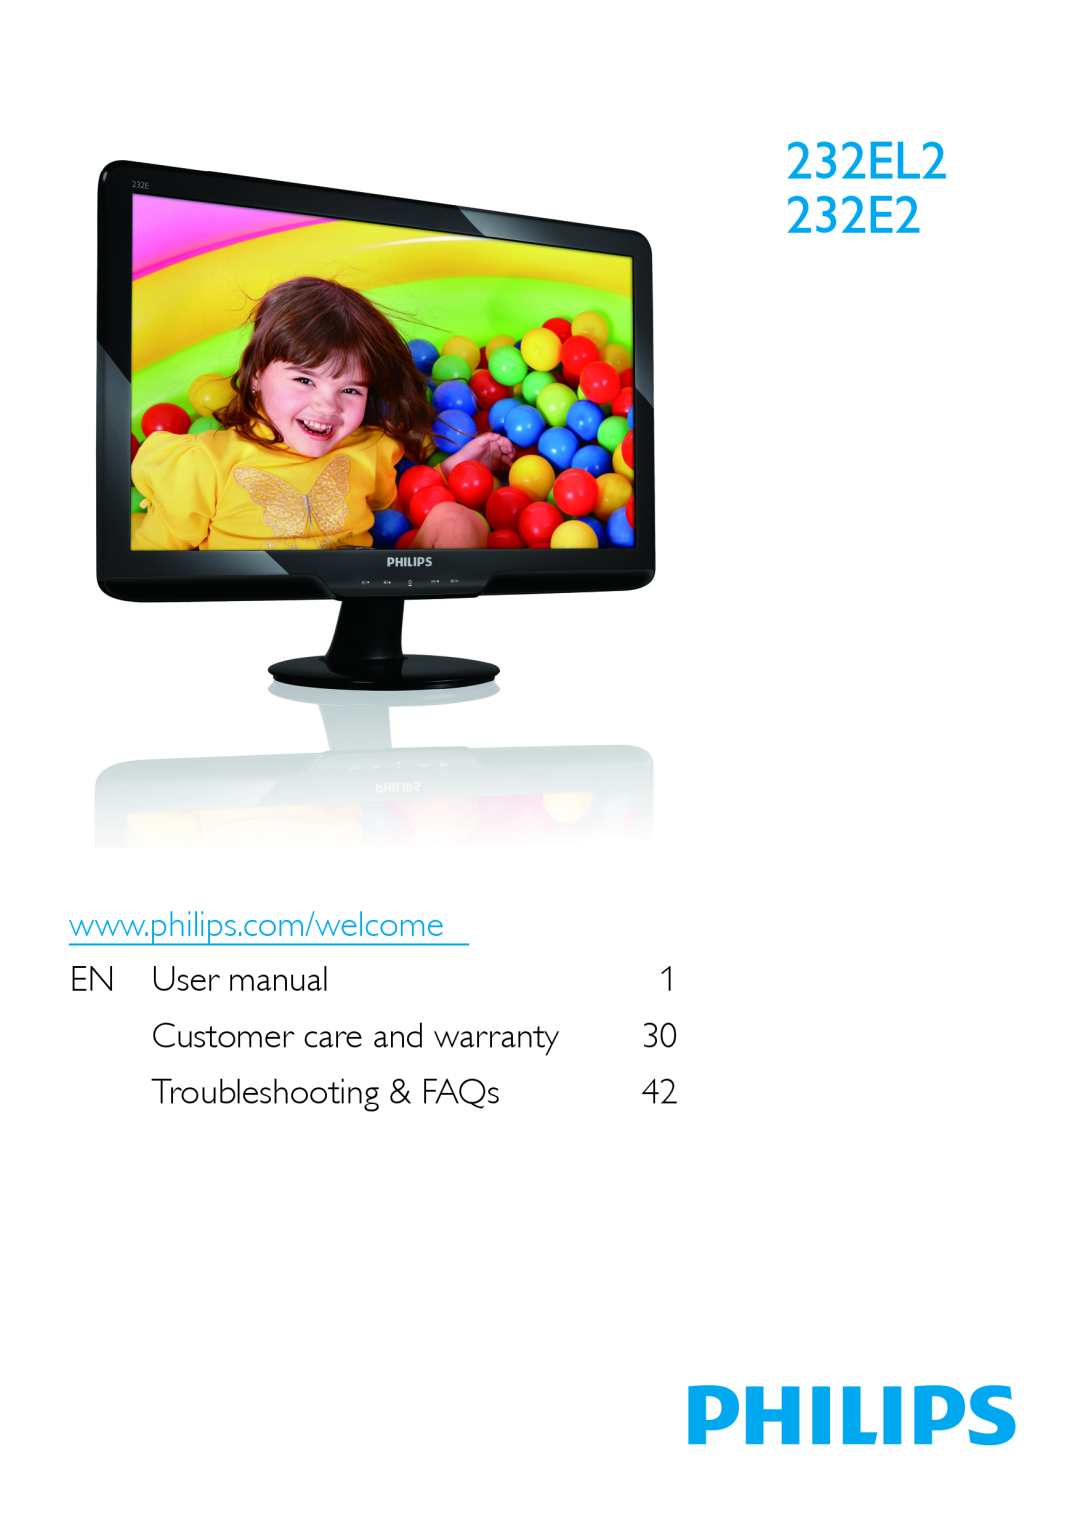 Philips 2.32E+04 user manual Troubleshooting & FAQs, 232EL2 232E2, Customer care and warranty 